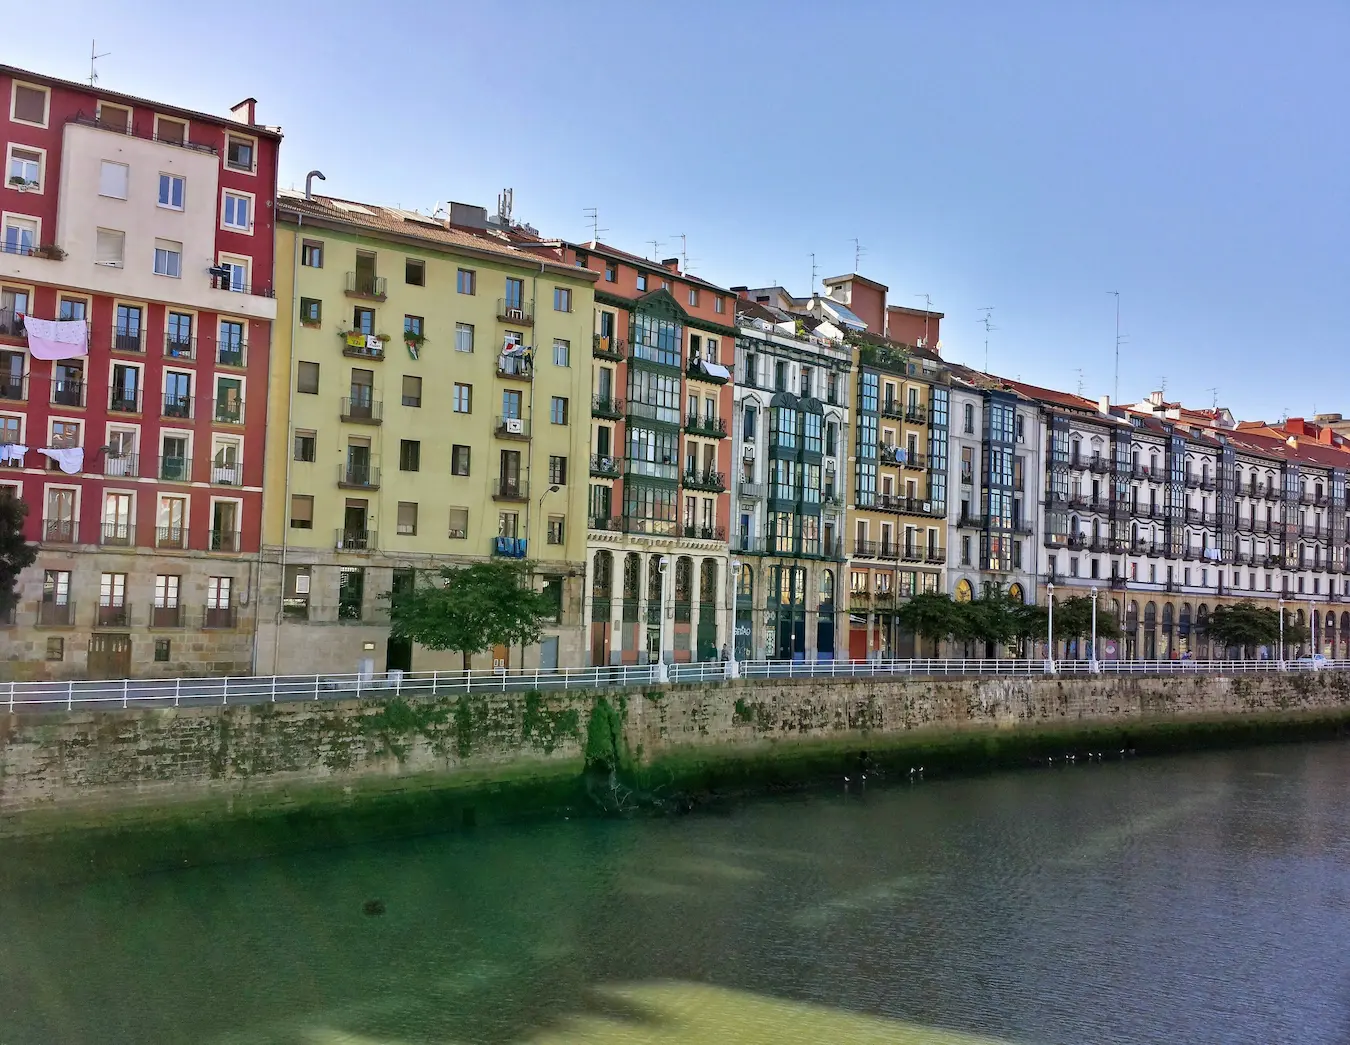 Canal - Euskadi - CertificadoElectronico.es